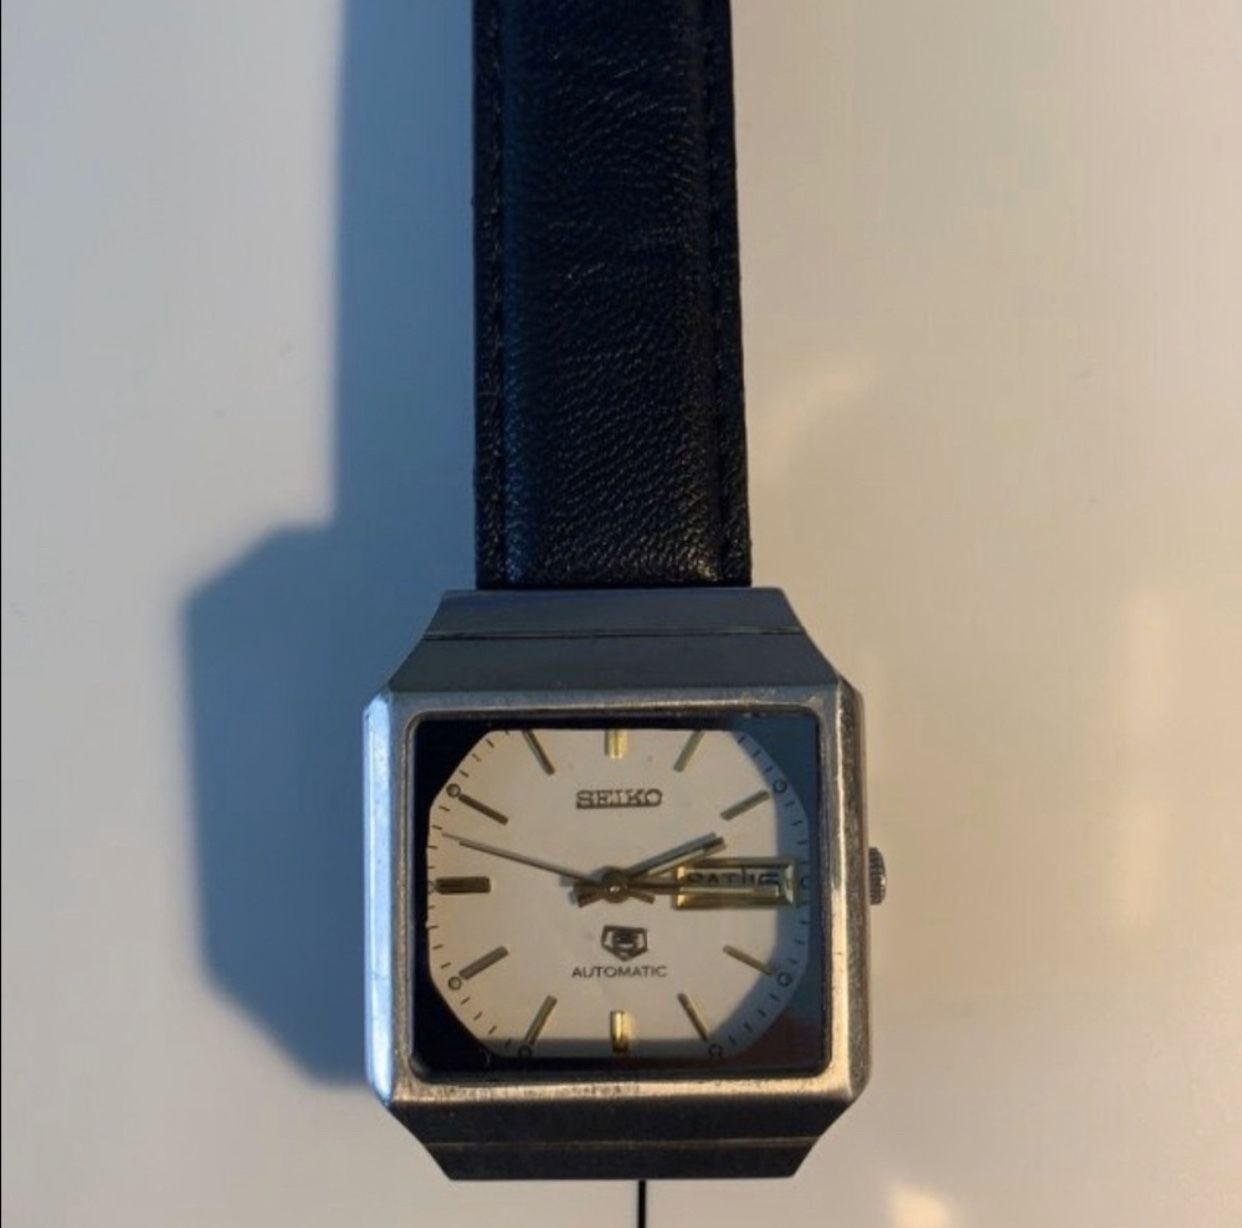 Vintage Seiko Automatic Watch (1978-84)